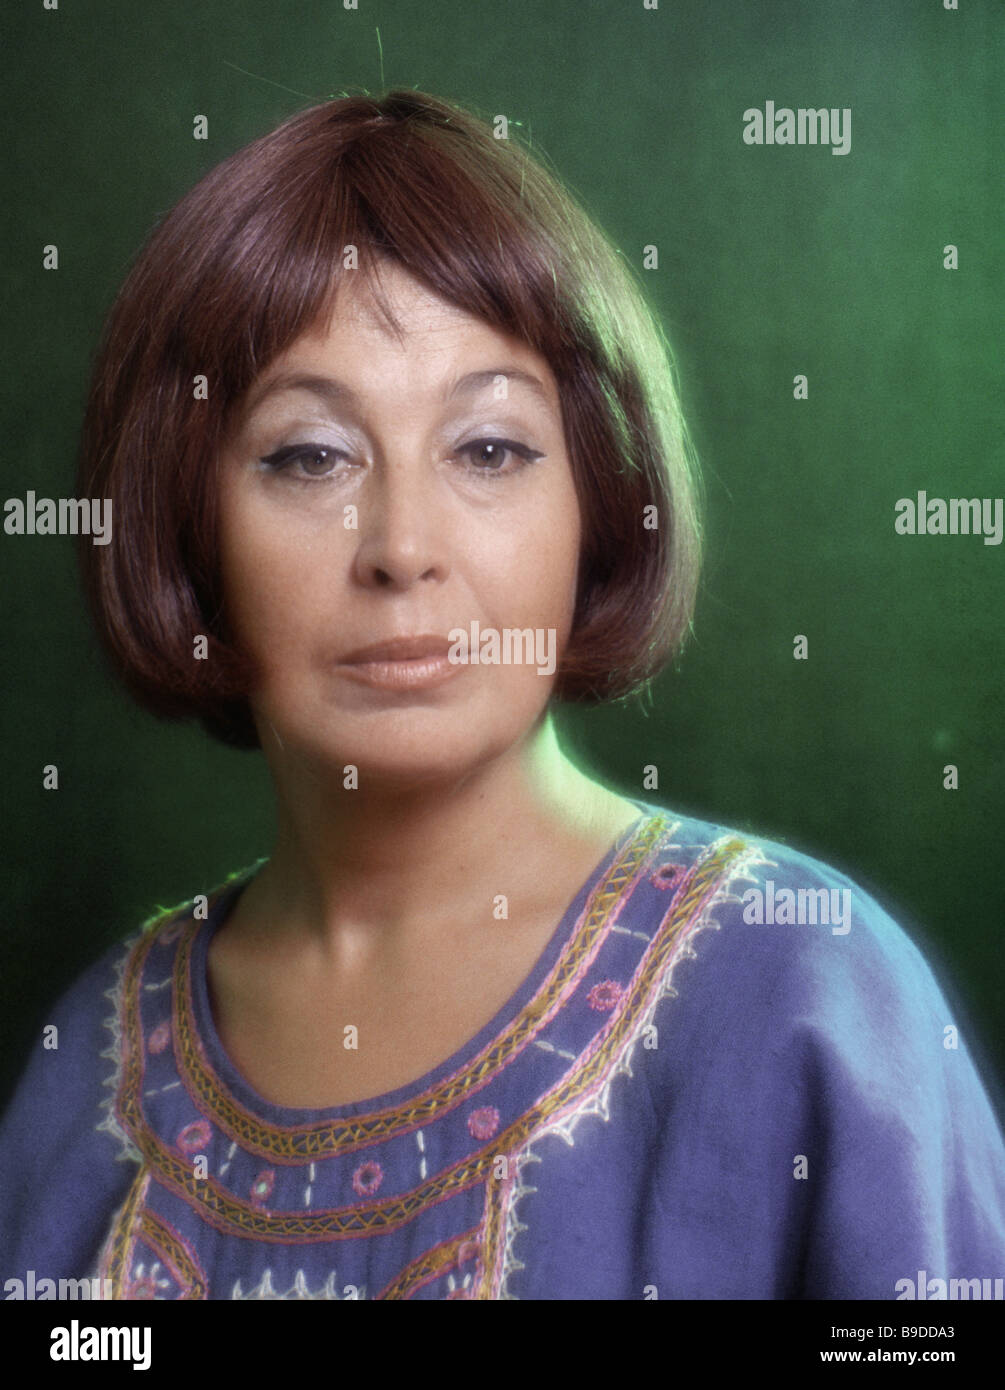 Margarita Korabelnikova film radio and television star Stock Photo - Alamy